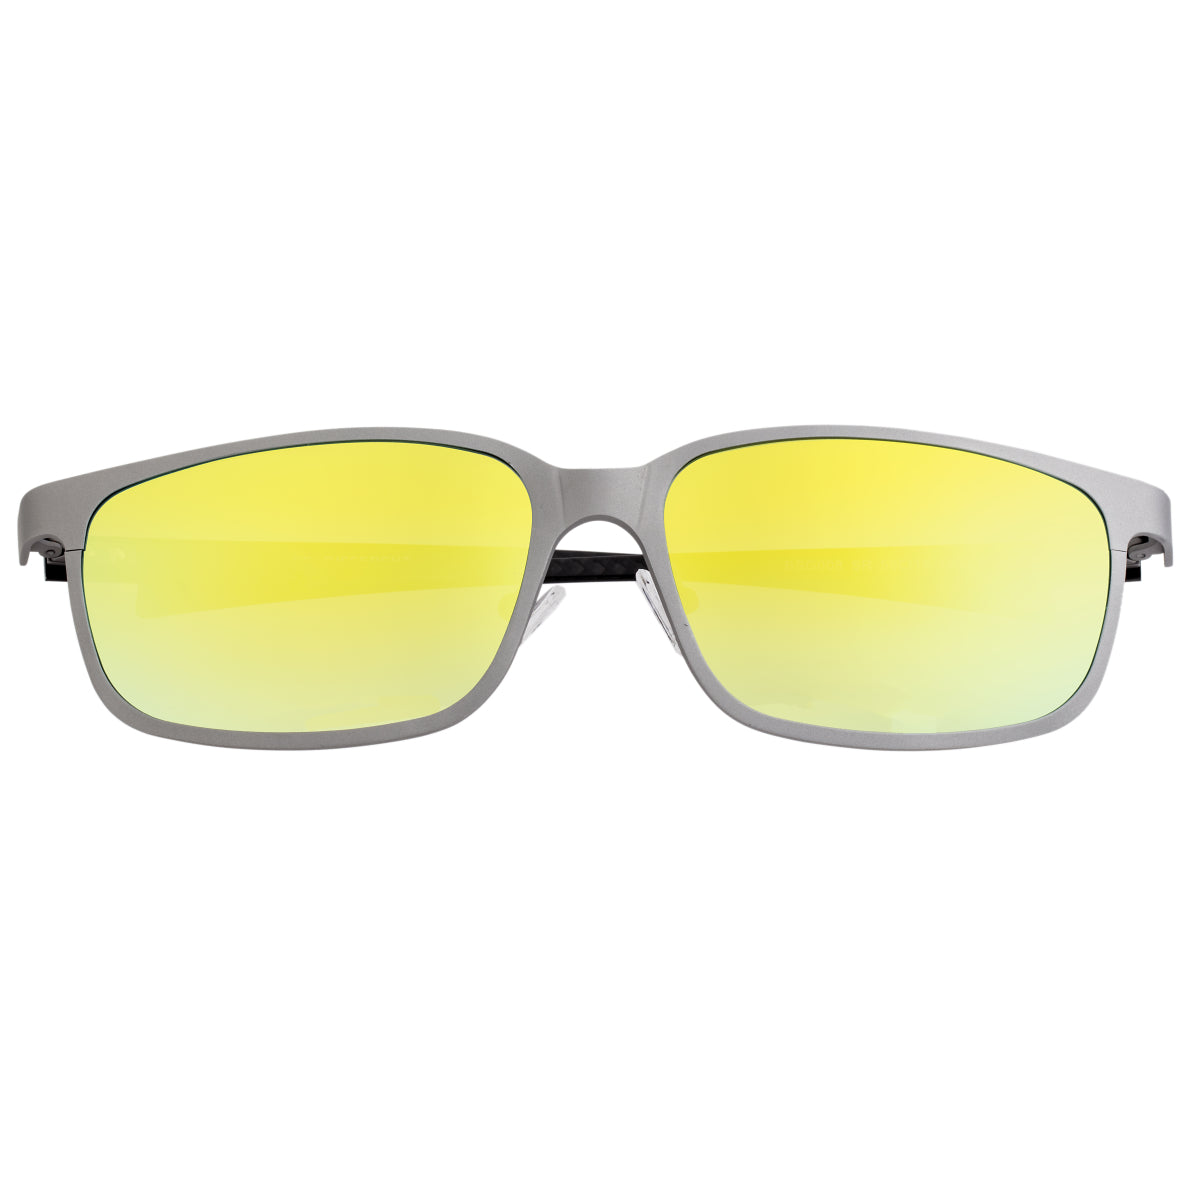 Breed Neptune Titanium and Carbon Fiber Polarized Sunglasses - Silver/Gold-Yellow - BSG008SR